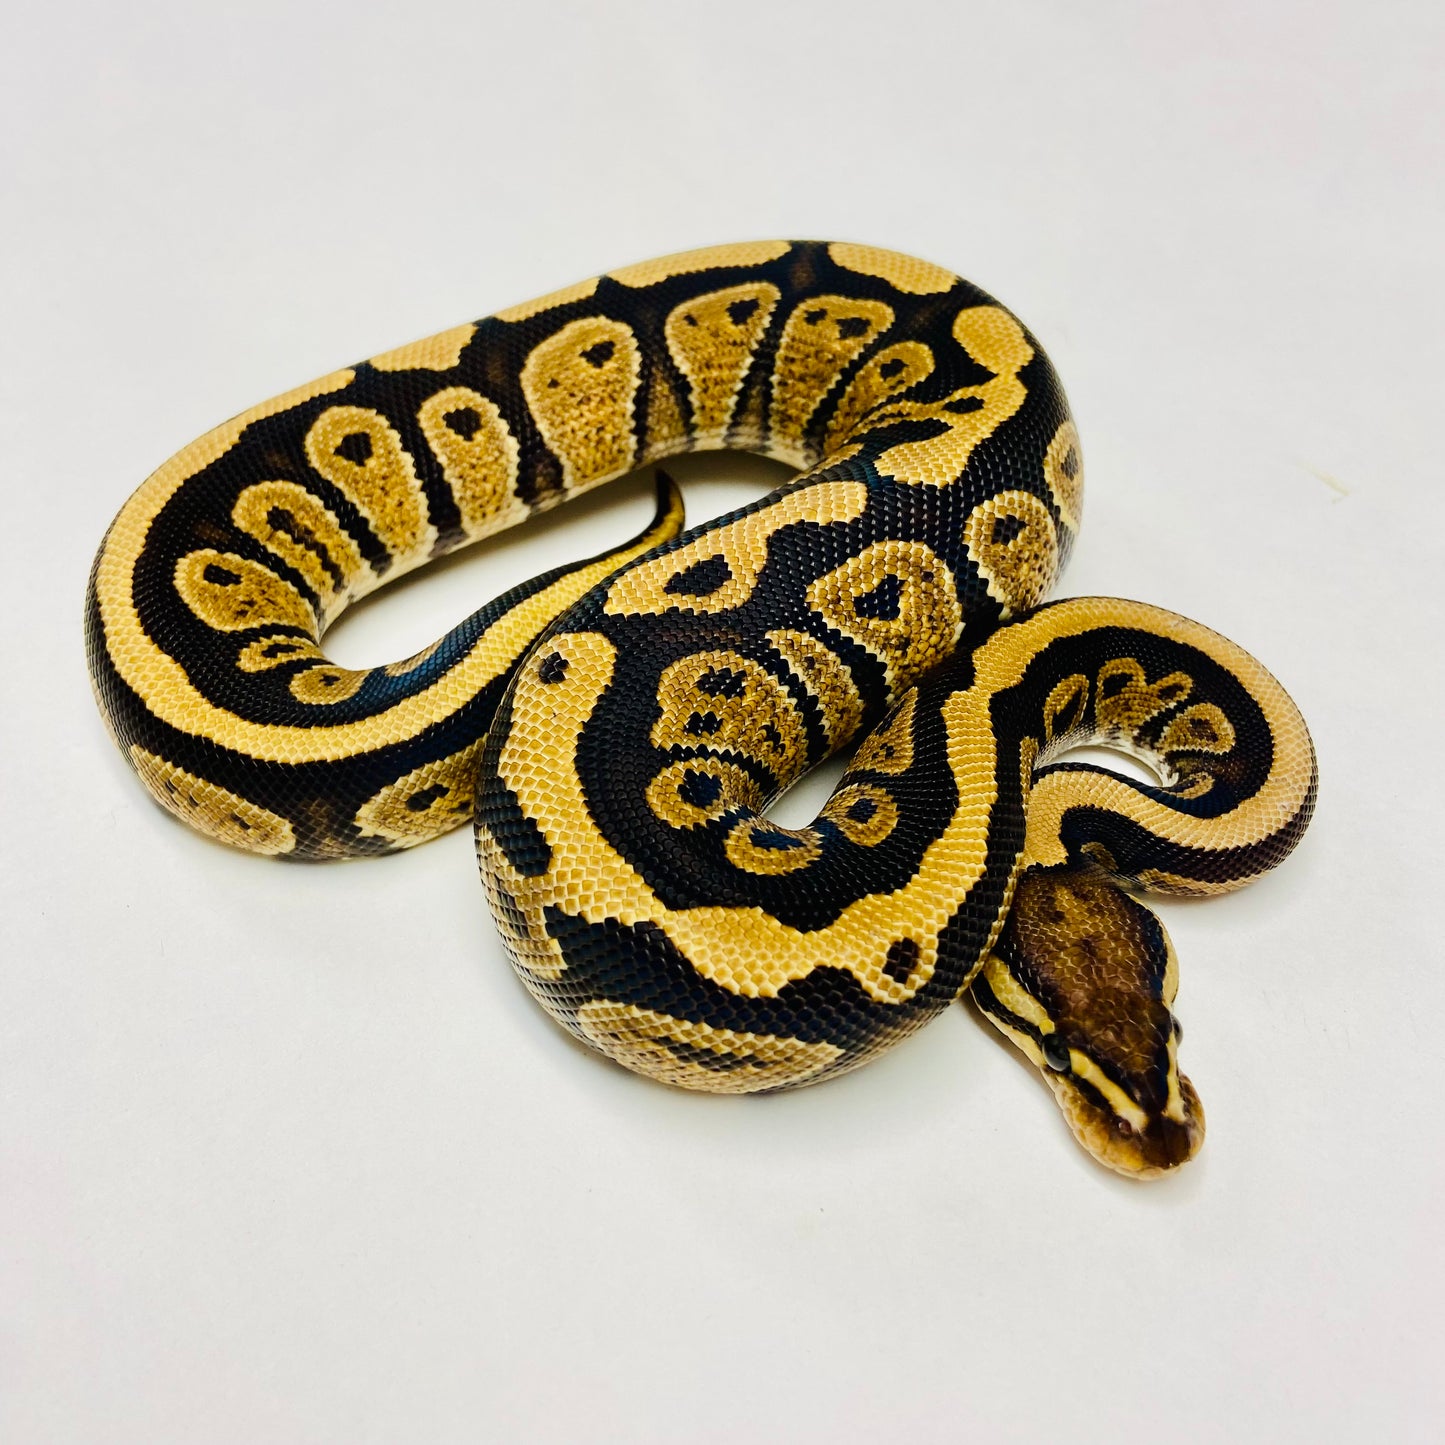 YellowBelly Ball Python Female- #2023F05